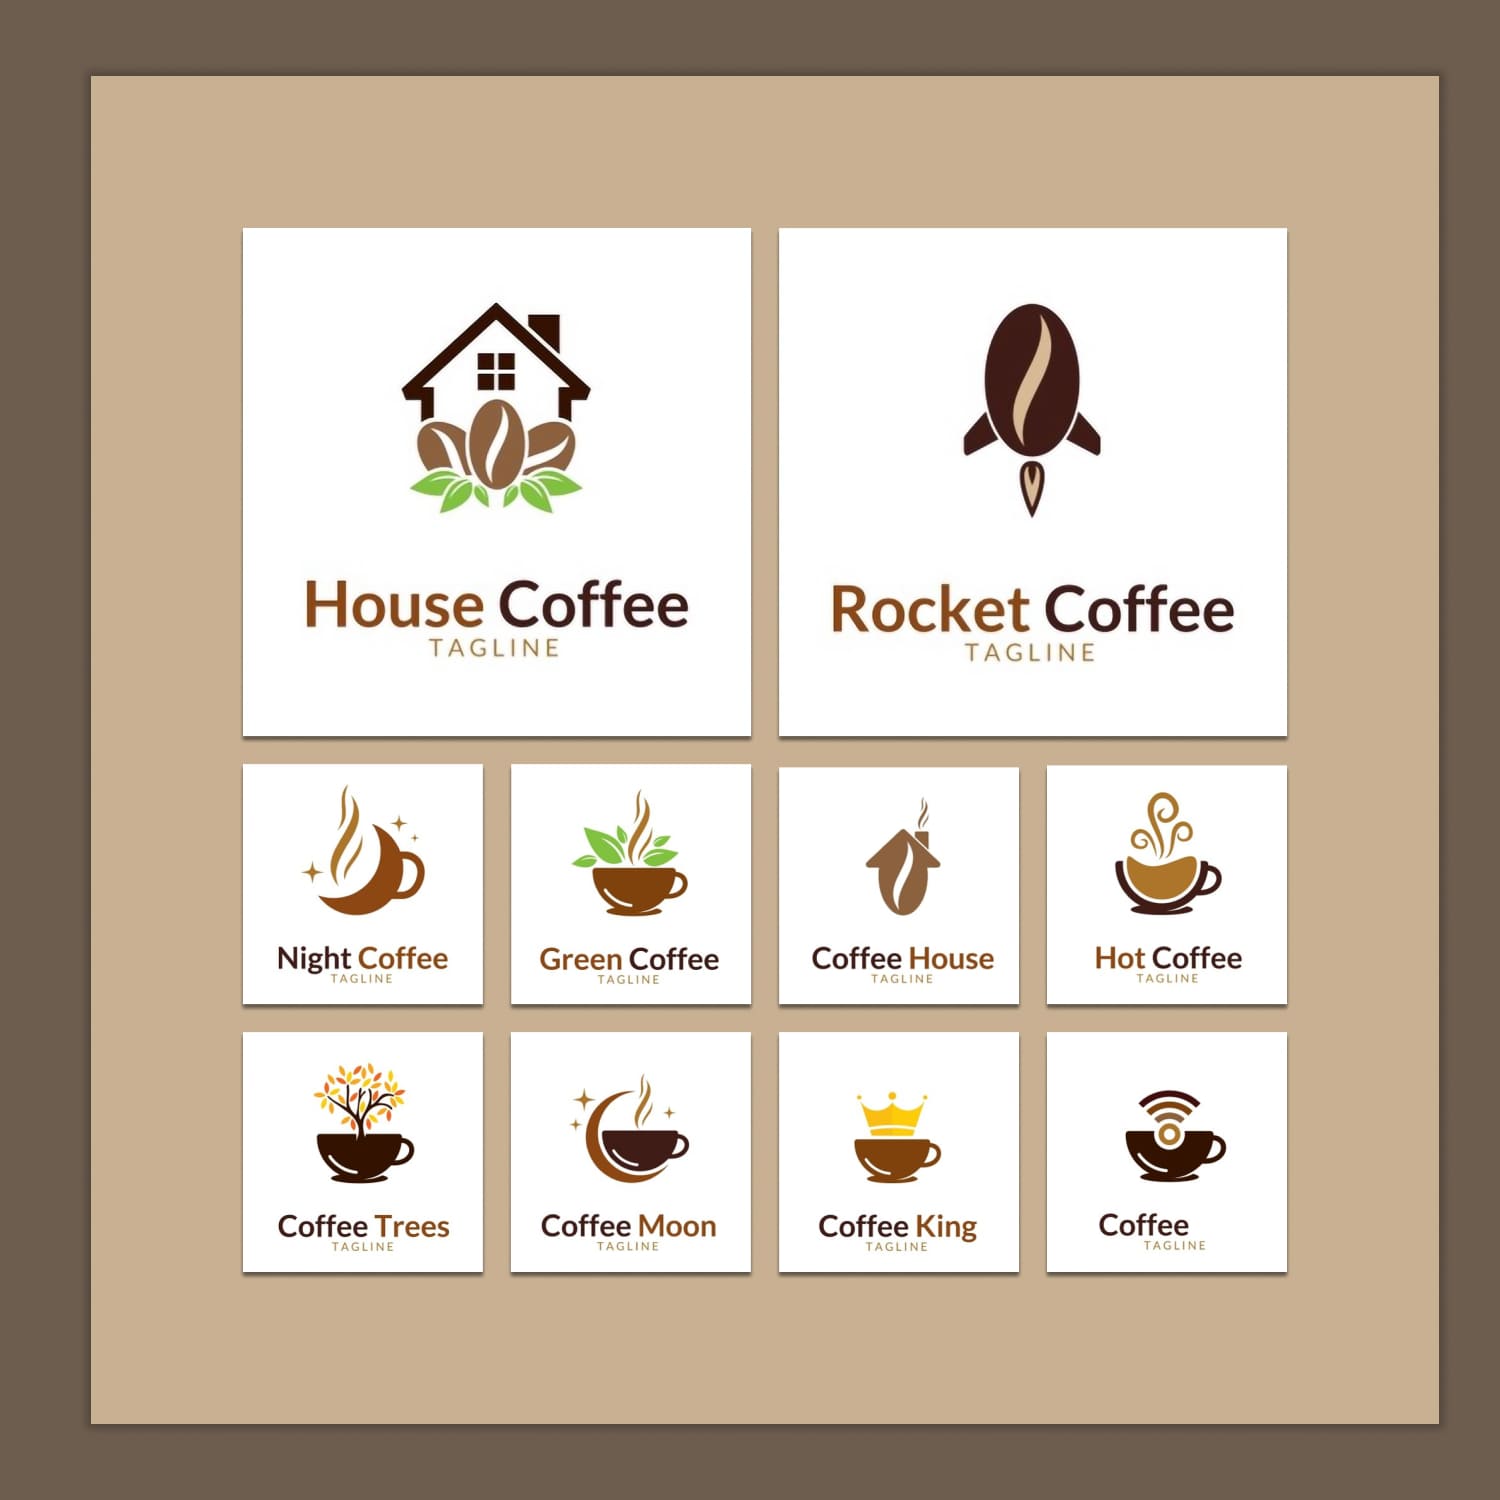 10 Coffee Logo Bundle #1 created by PutraCetol Studio.